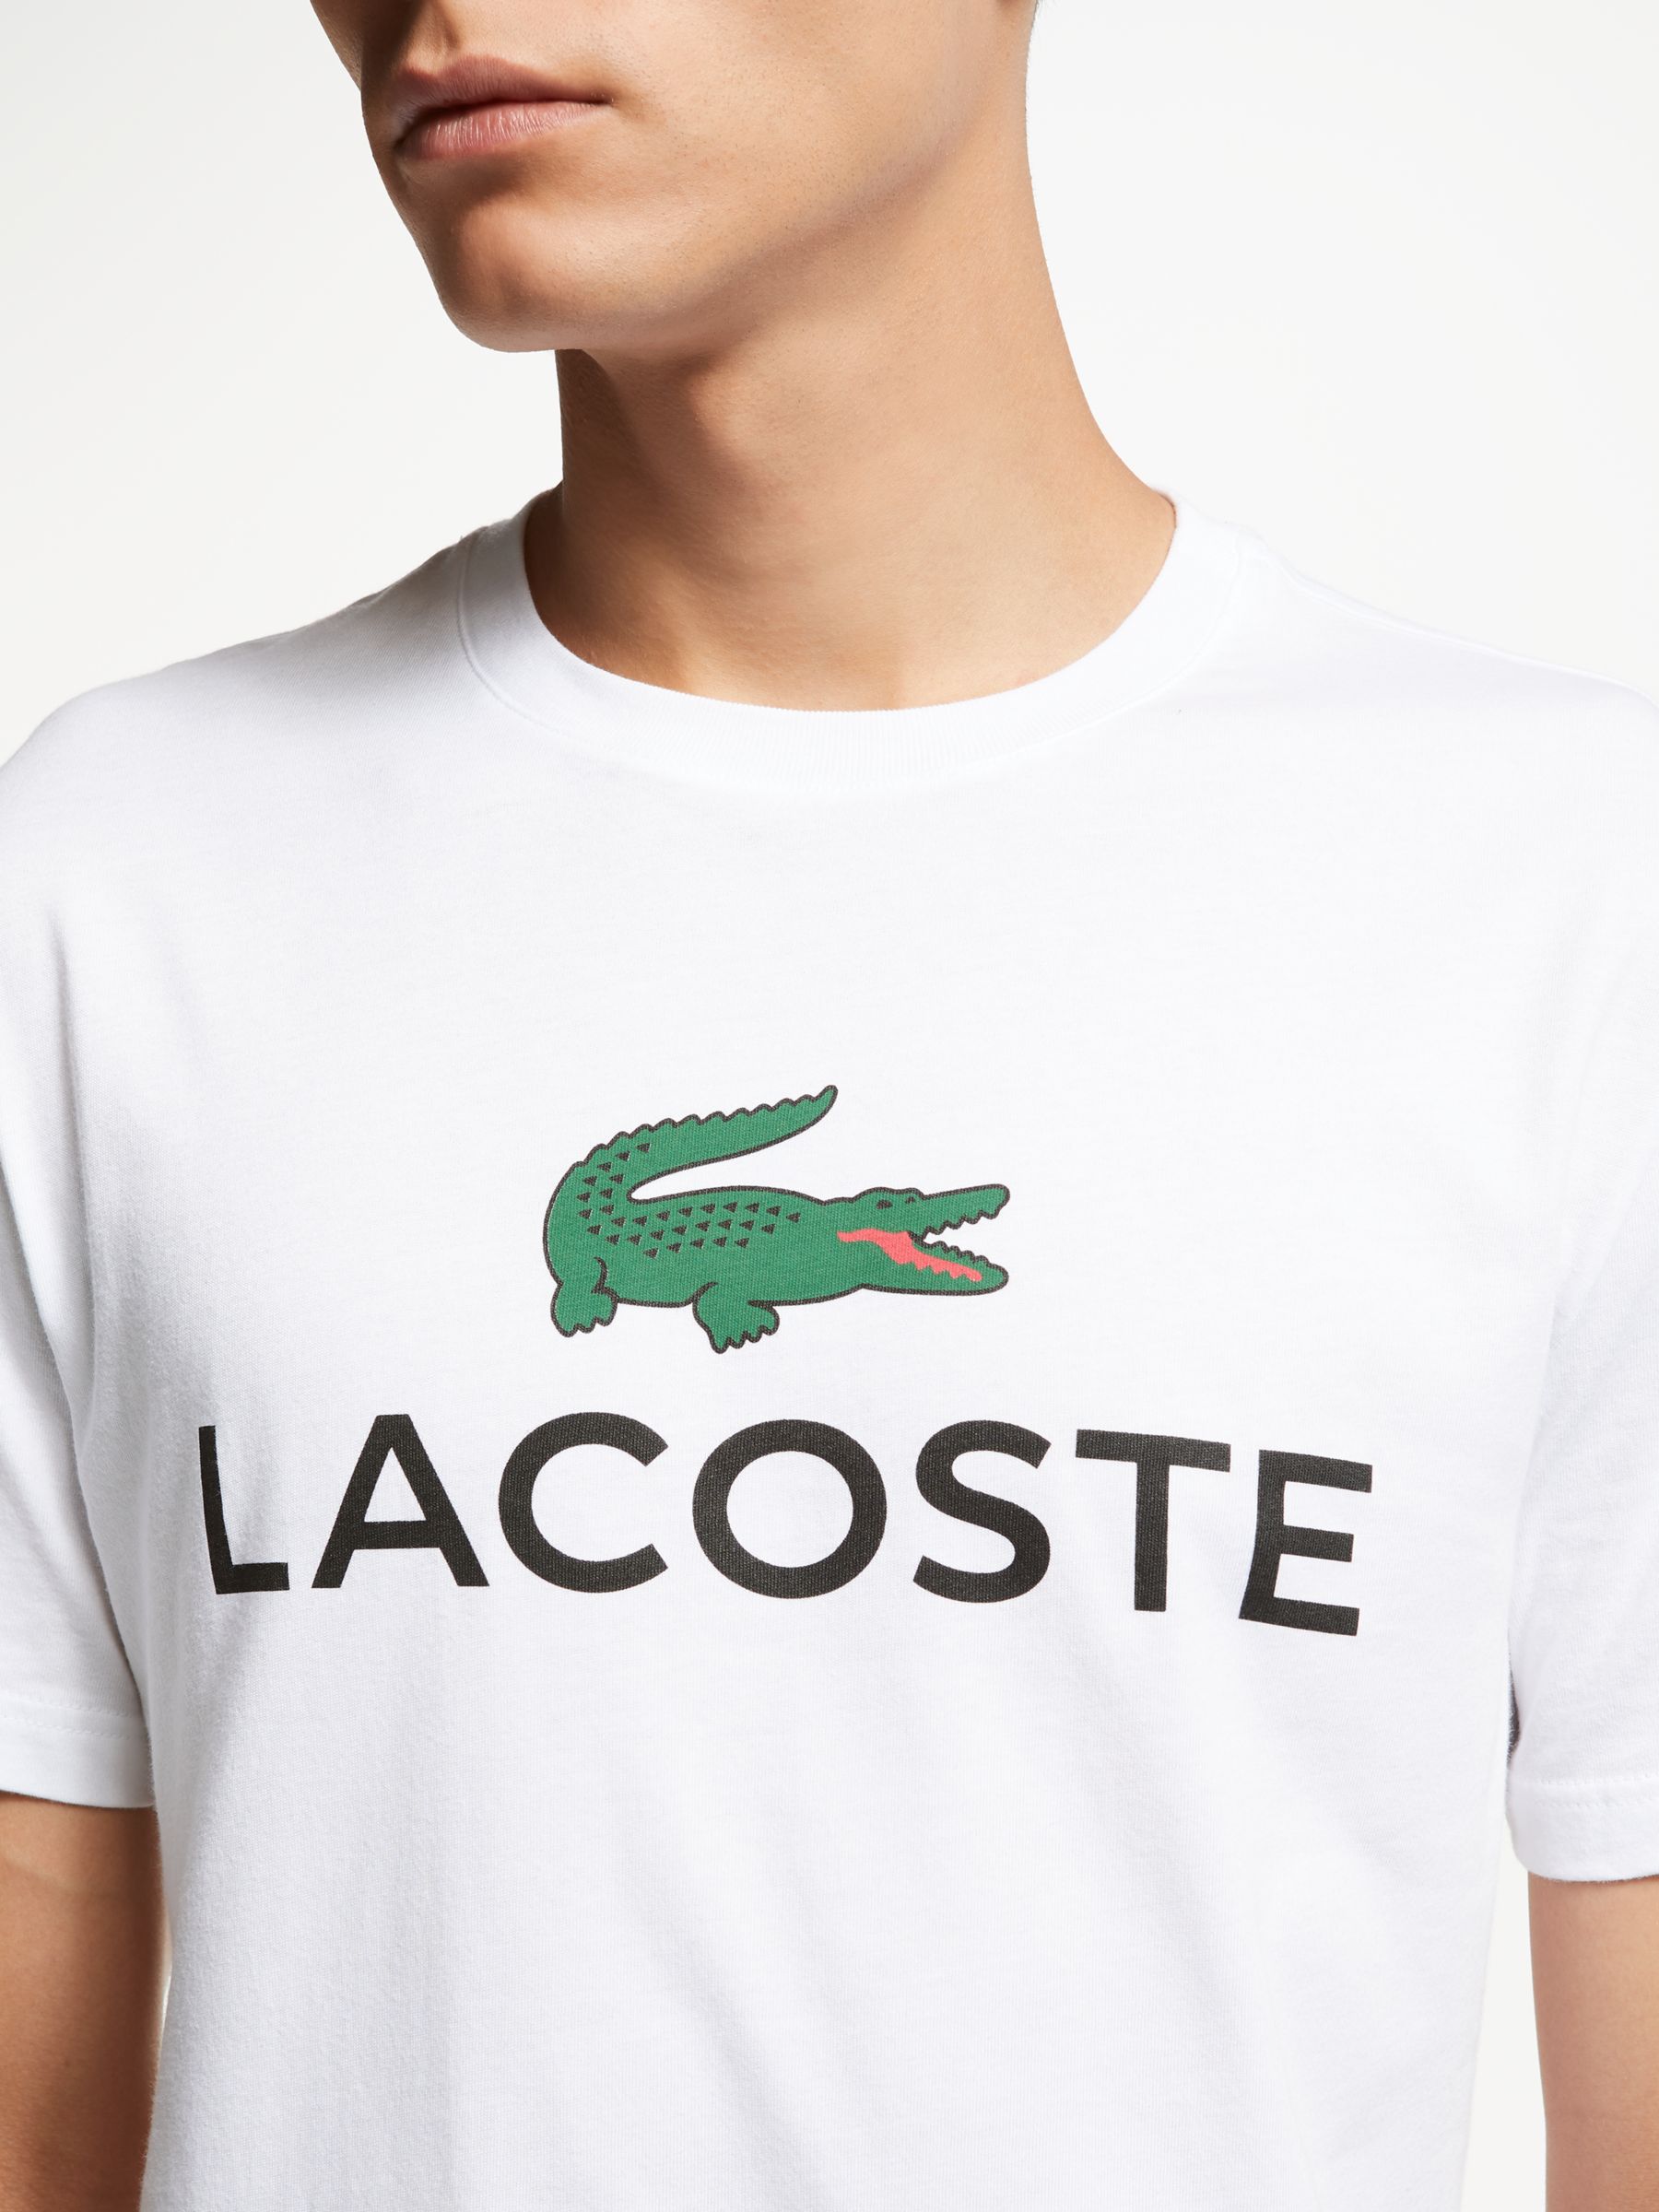 Lacoste Short Sleeve Large Croc Logo T-Shirt at John Lewis & Partners